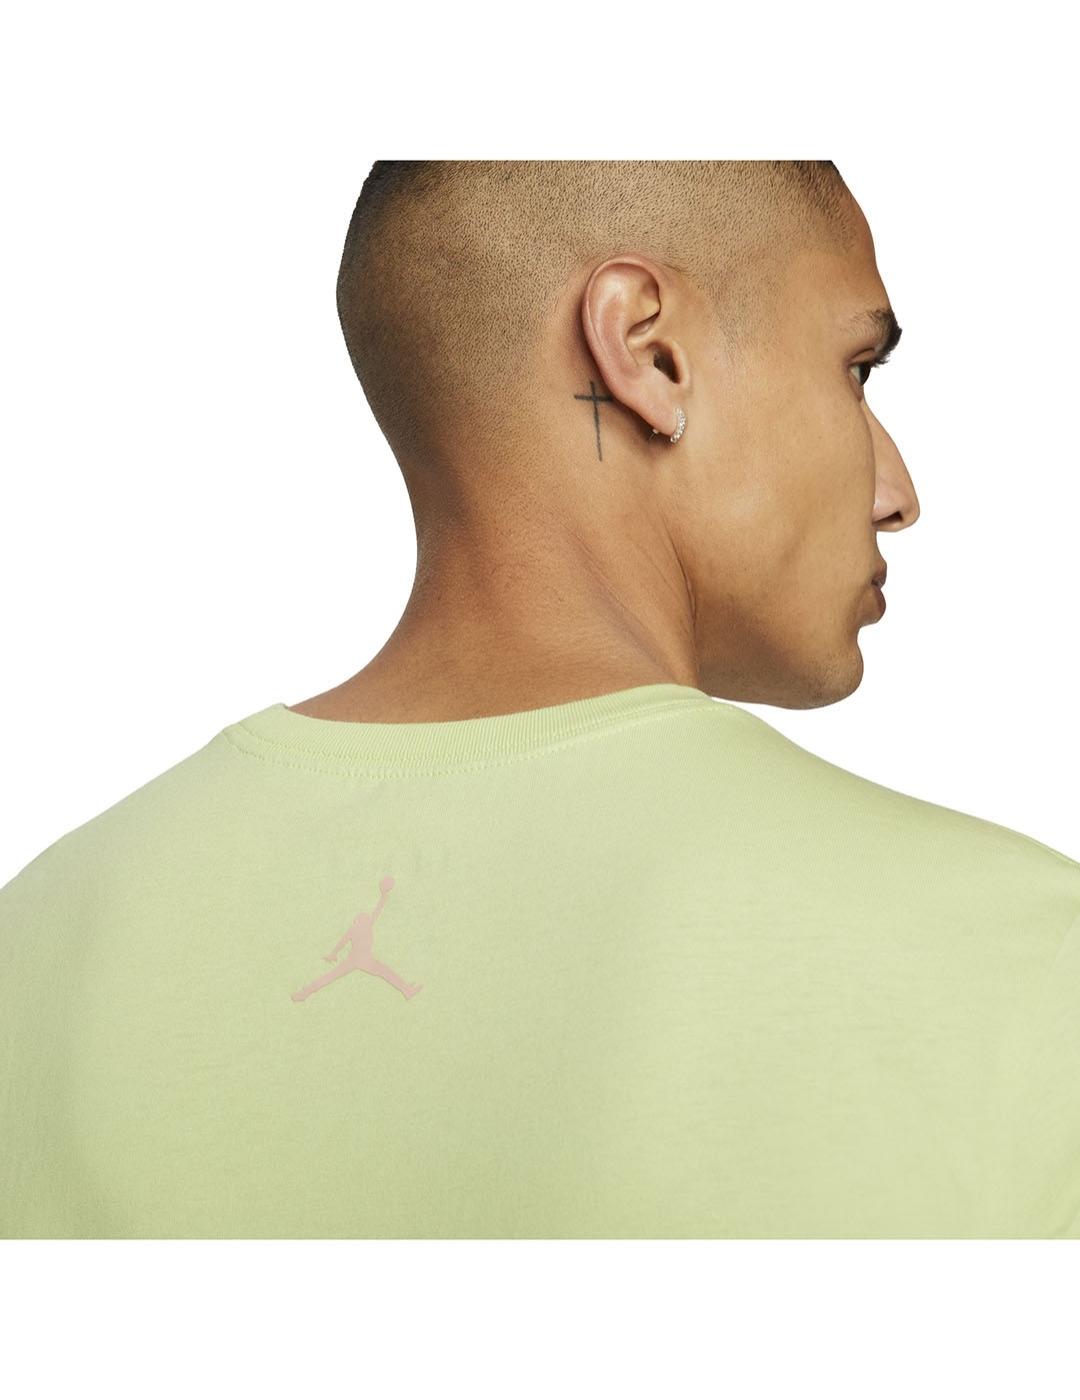 Camiseta Hombre Nike Jordan Jumpman Verde